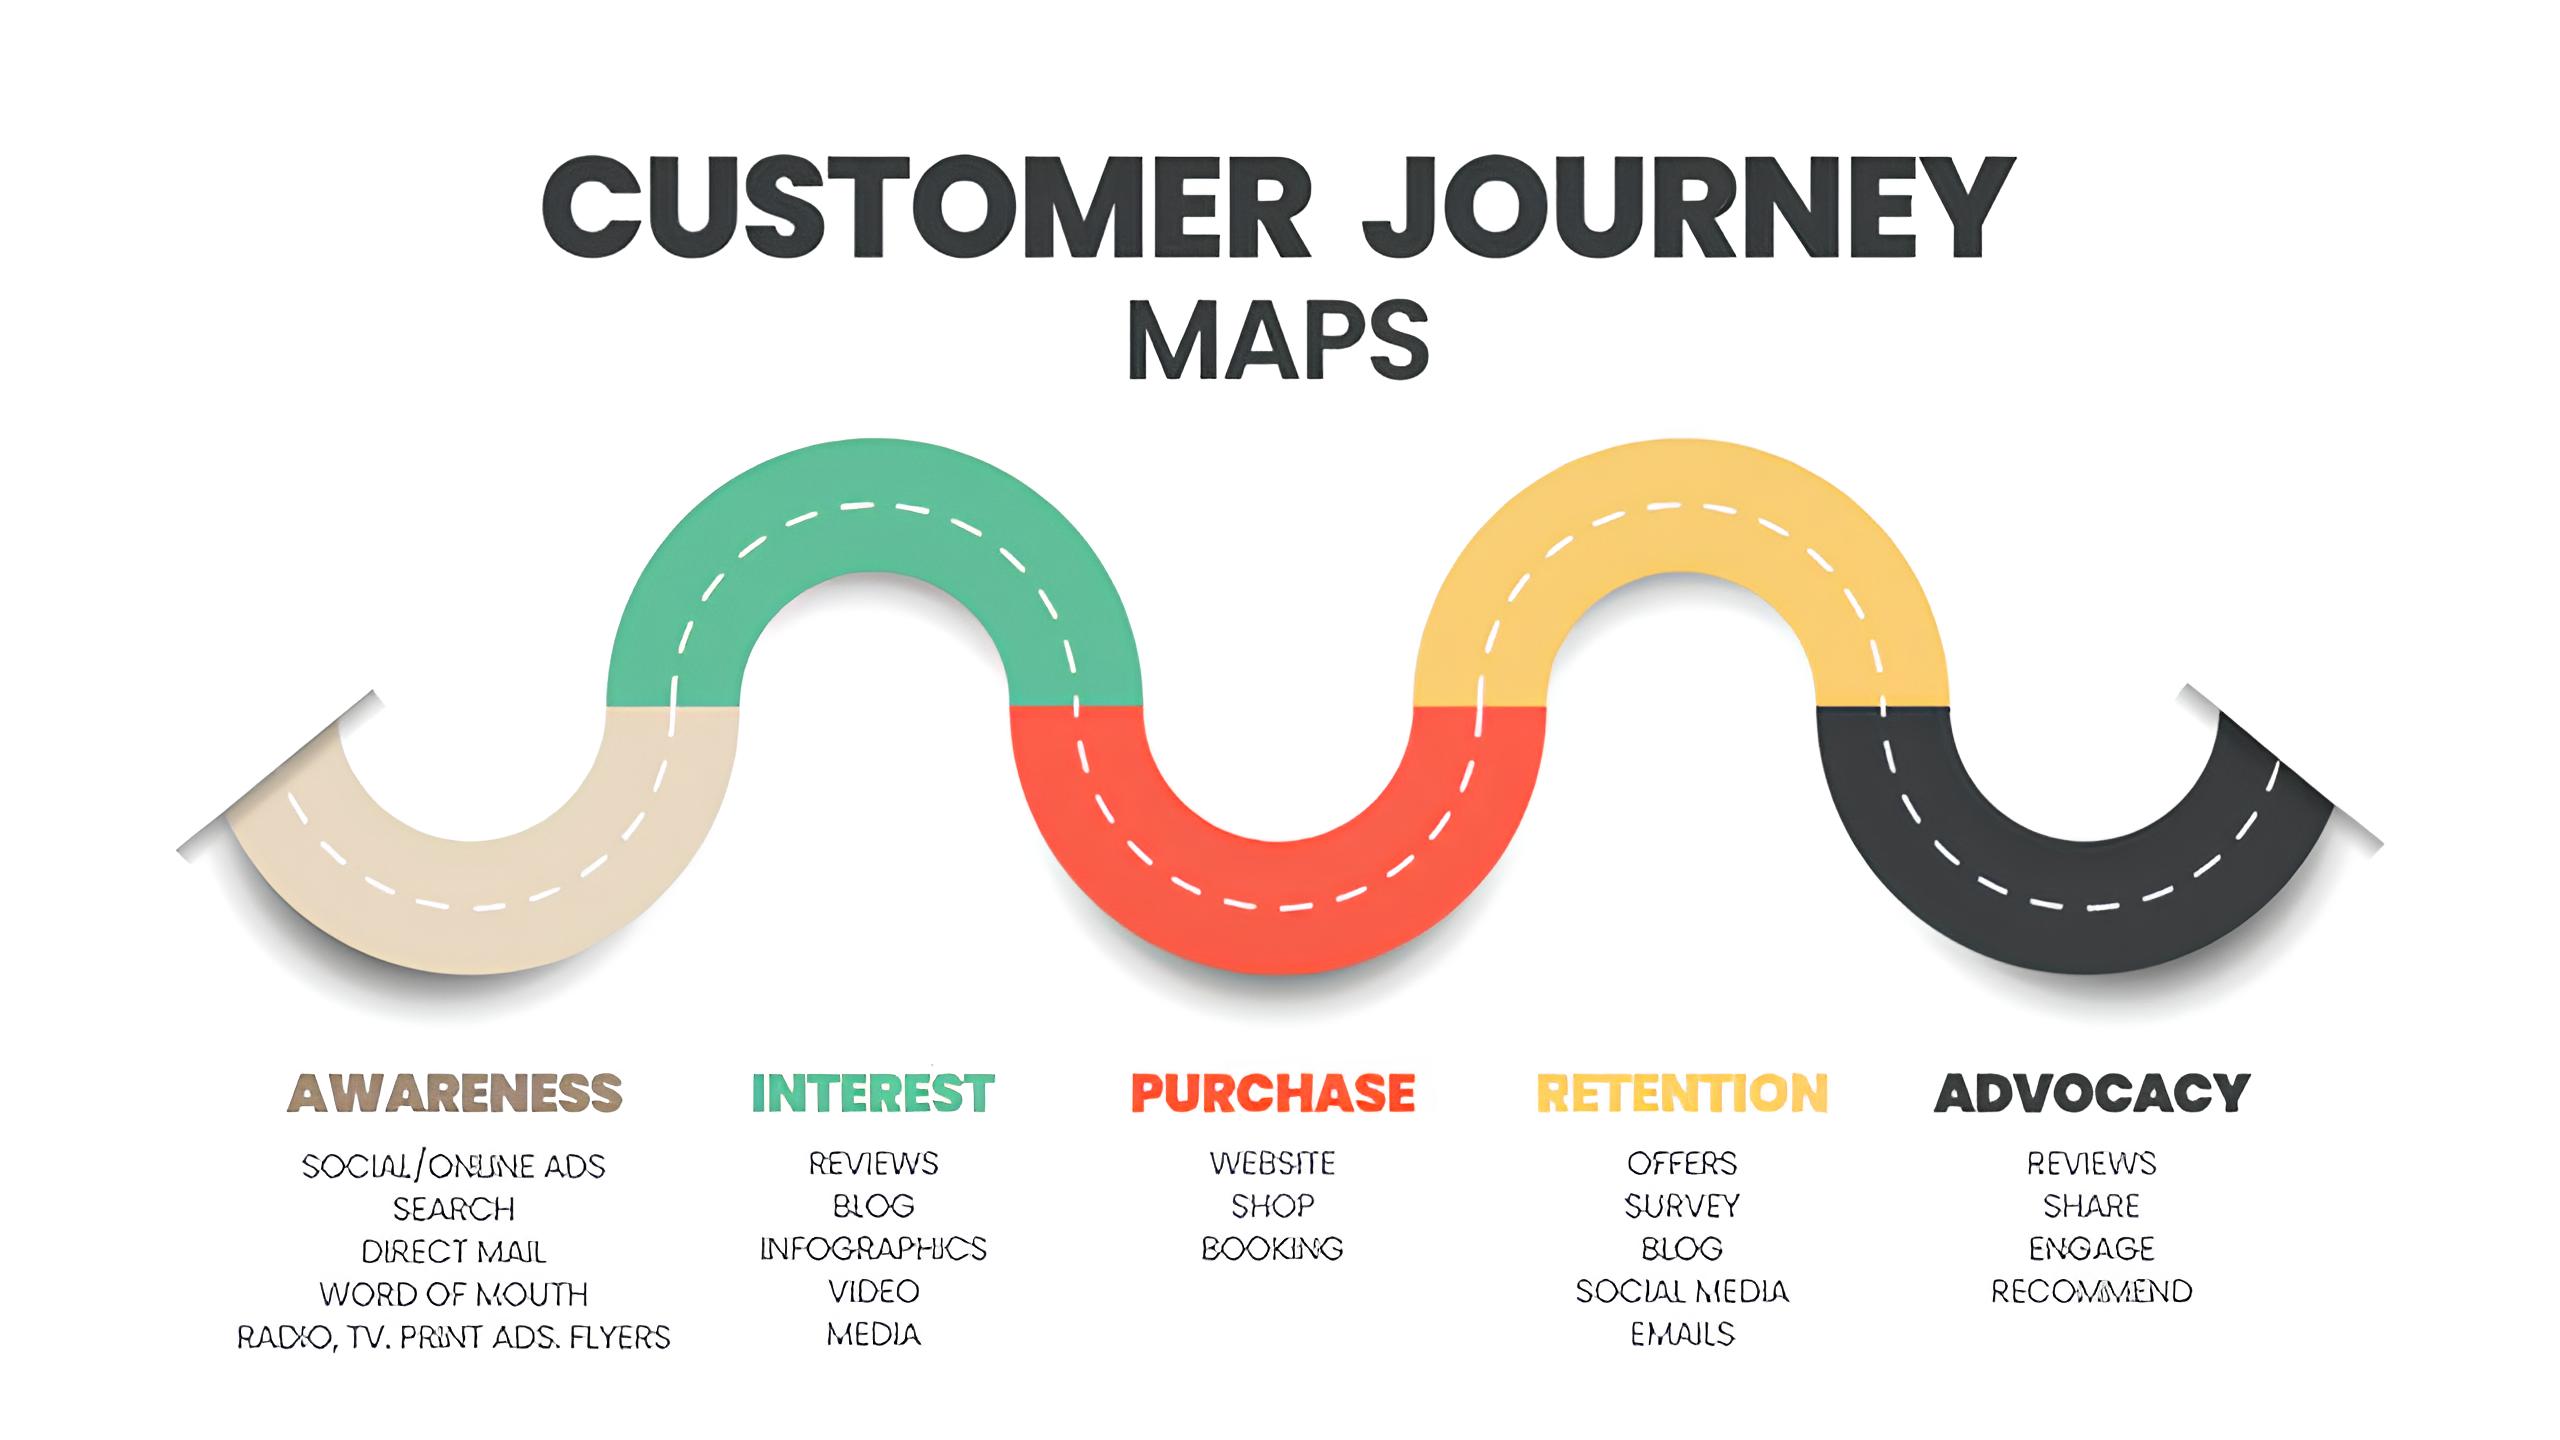 Case Study: Rewind’s Customer Journey Mapping Success